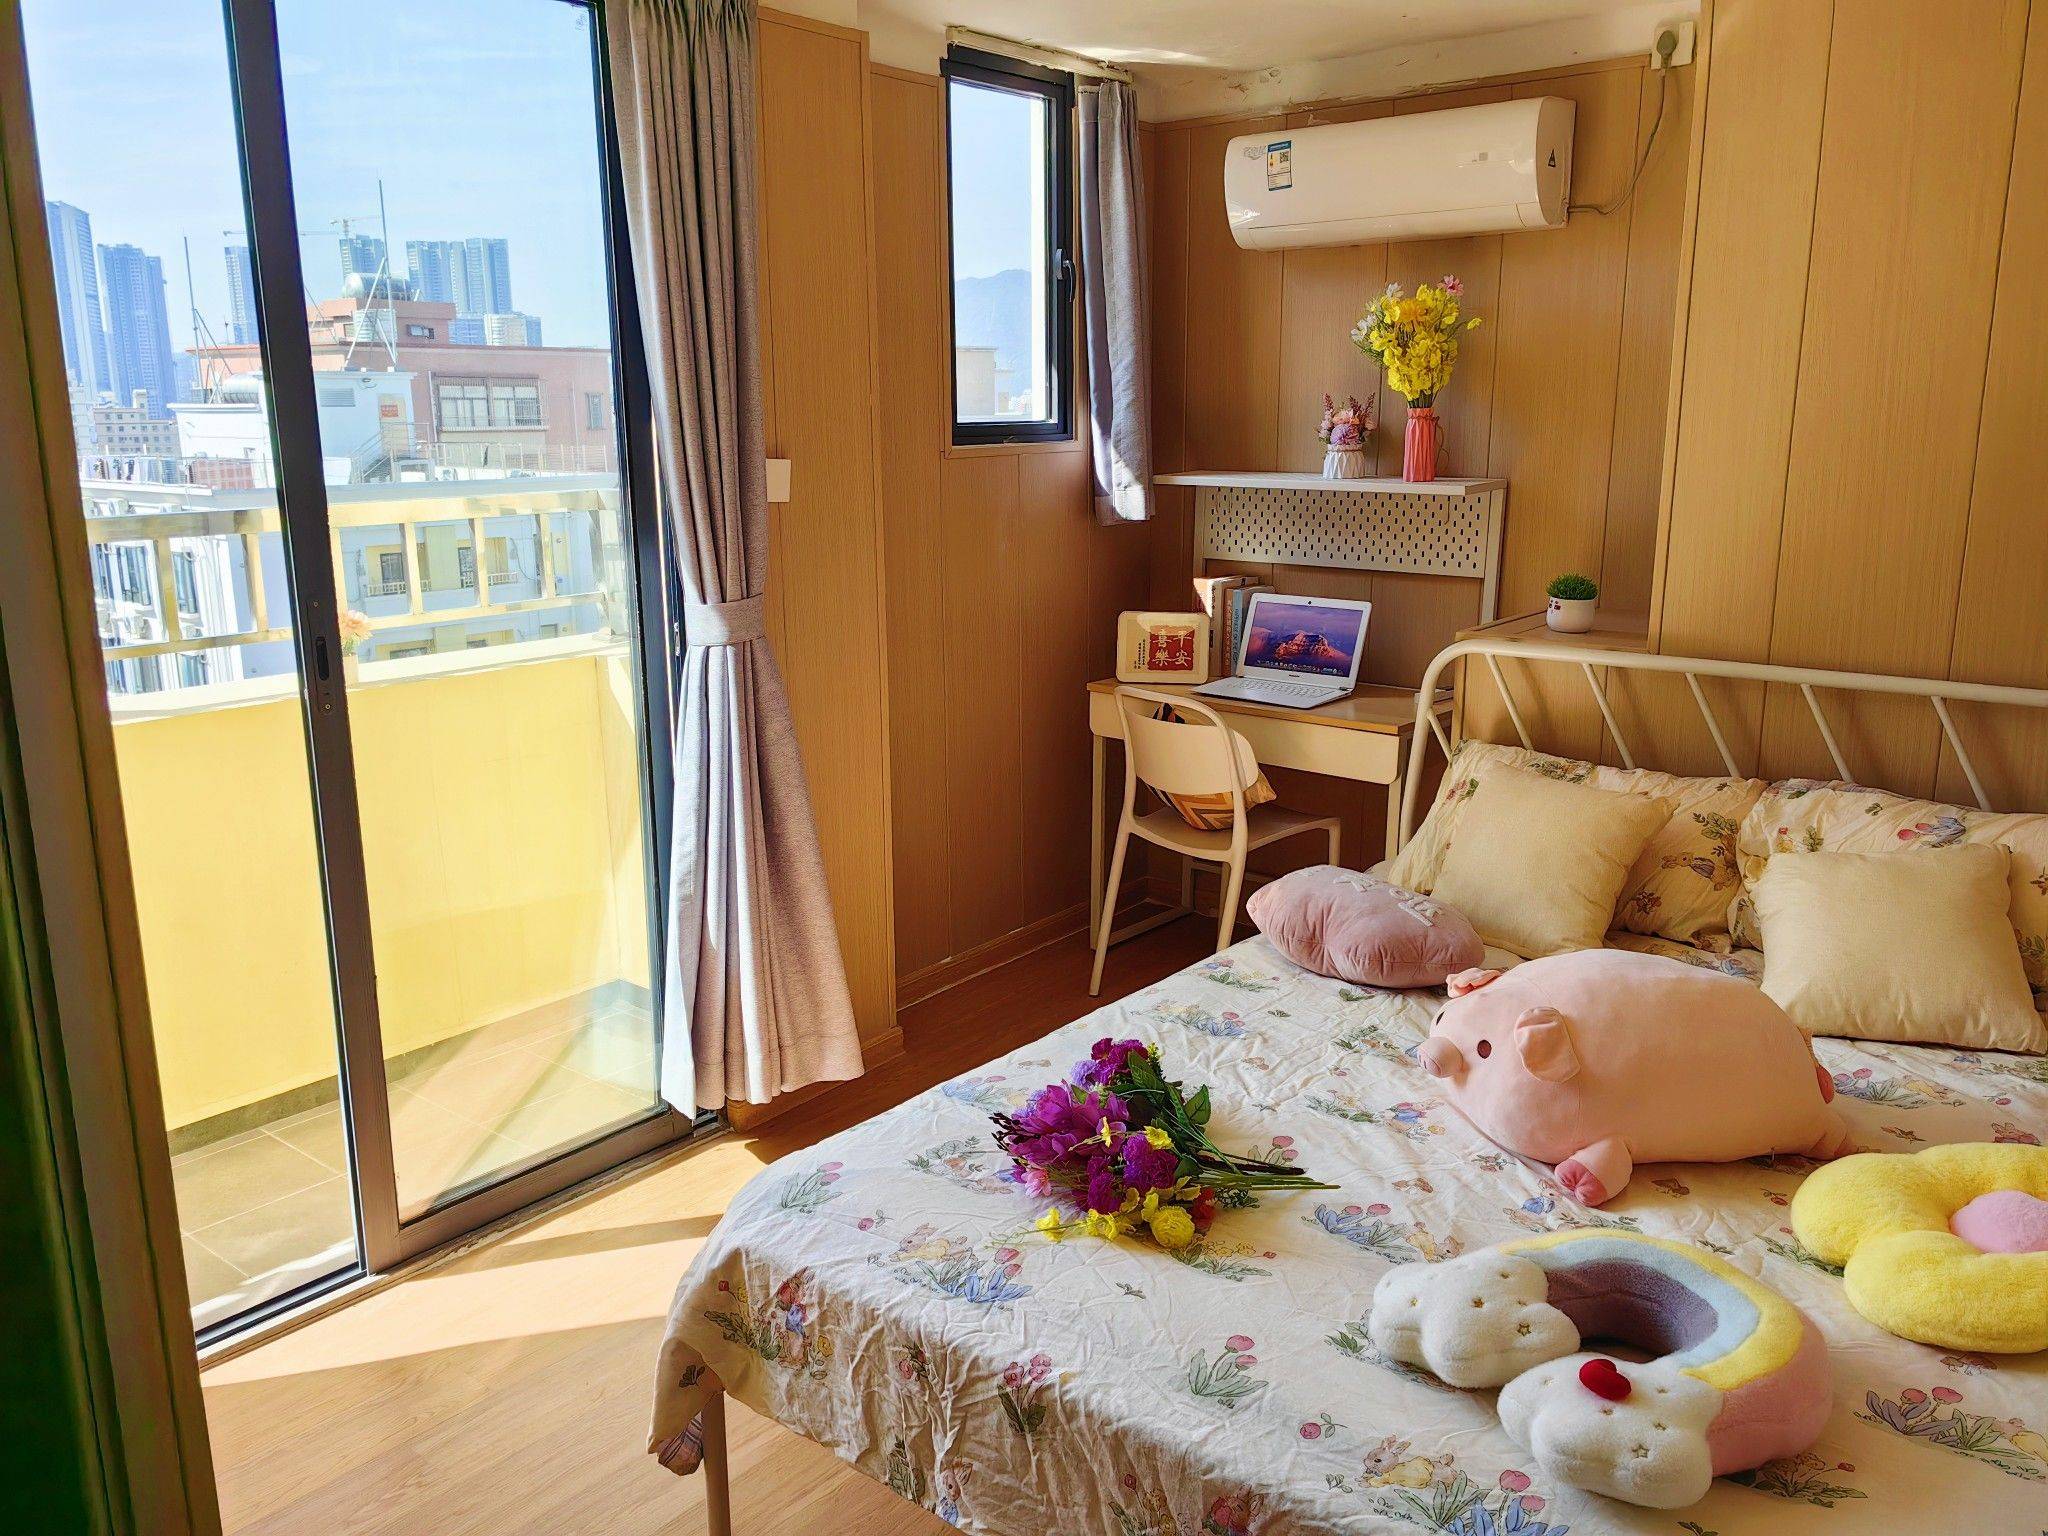 Shenzhen-Longhua-Cozy Home,Clean&Comfy,No Gender Limit,Hustle & Bustle,Chilled